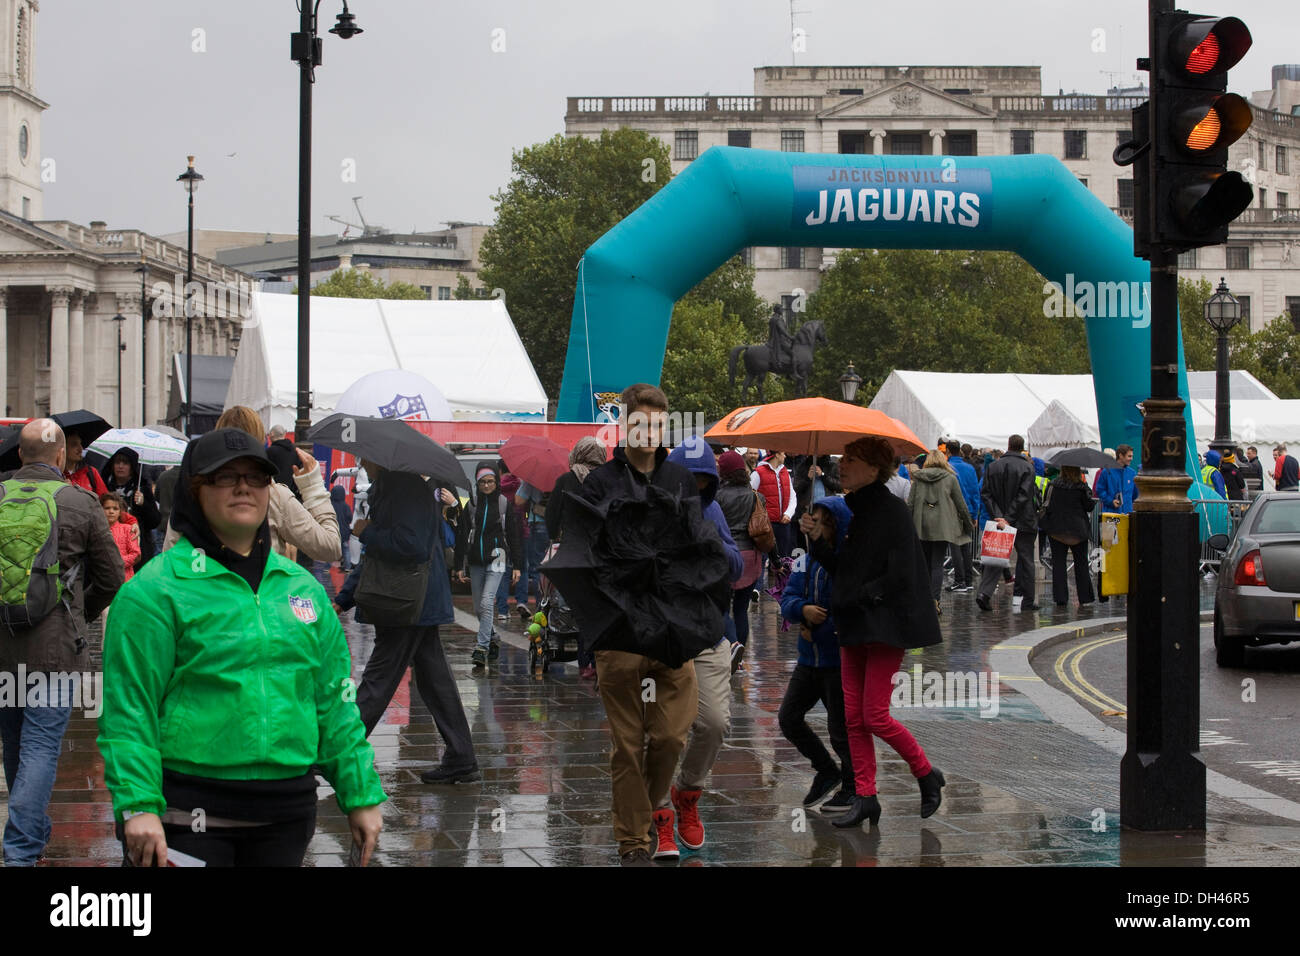 Kundenansturm bei Regen für die NFL Jacksonville Jaguars Anzeige in Trafalgar Square in London England "NFL Comes to London" Stockfoto